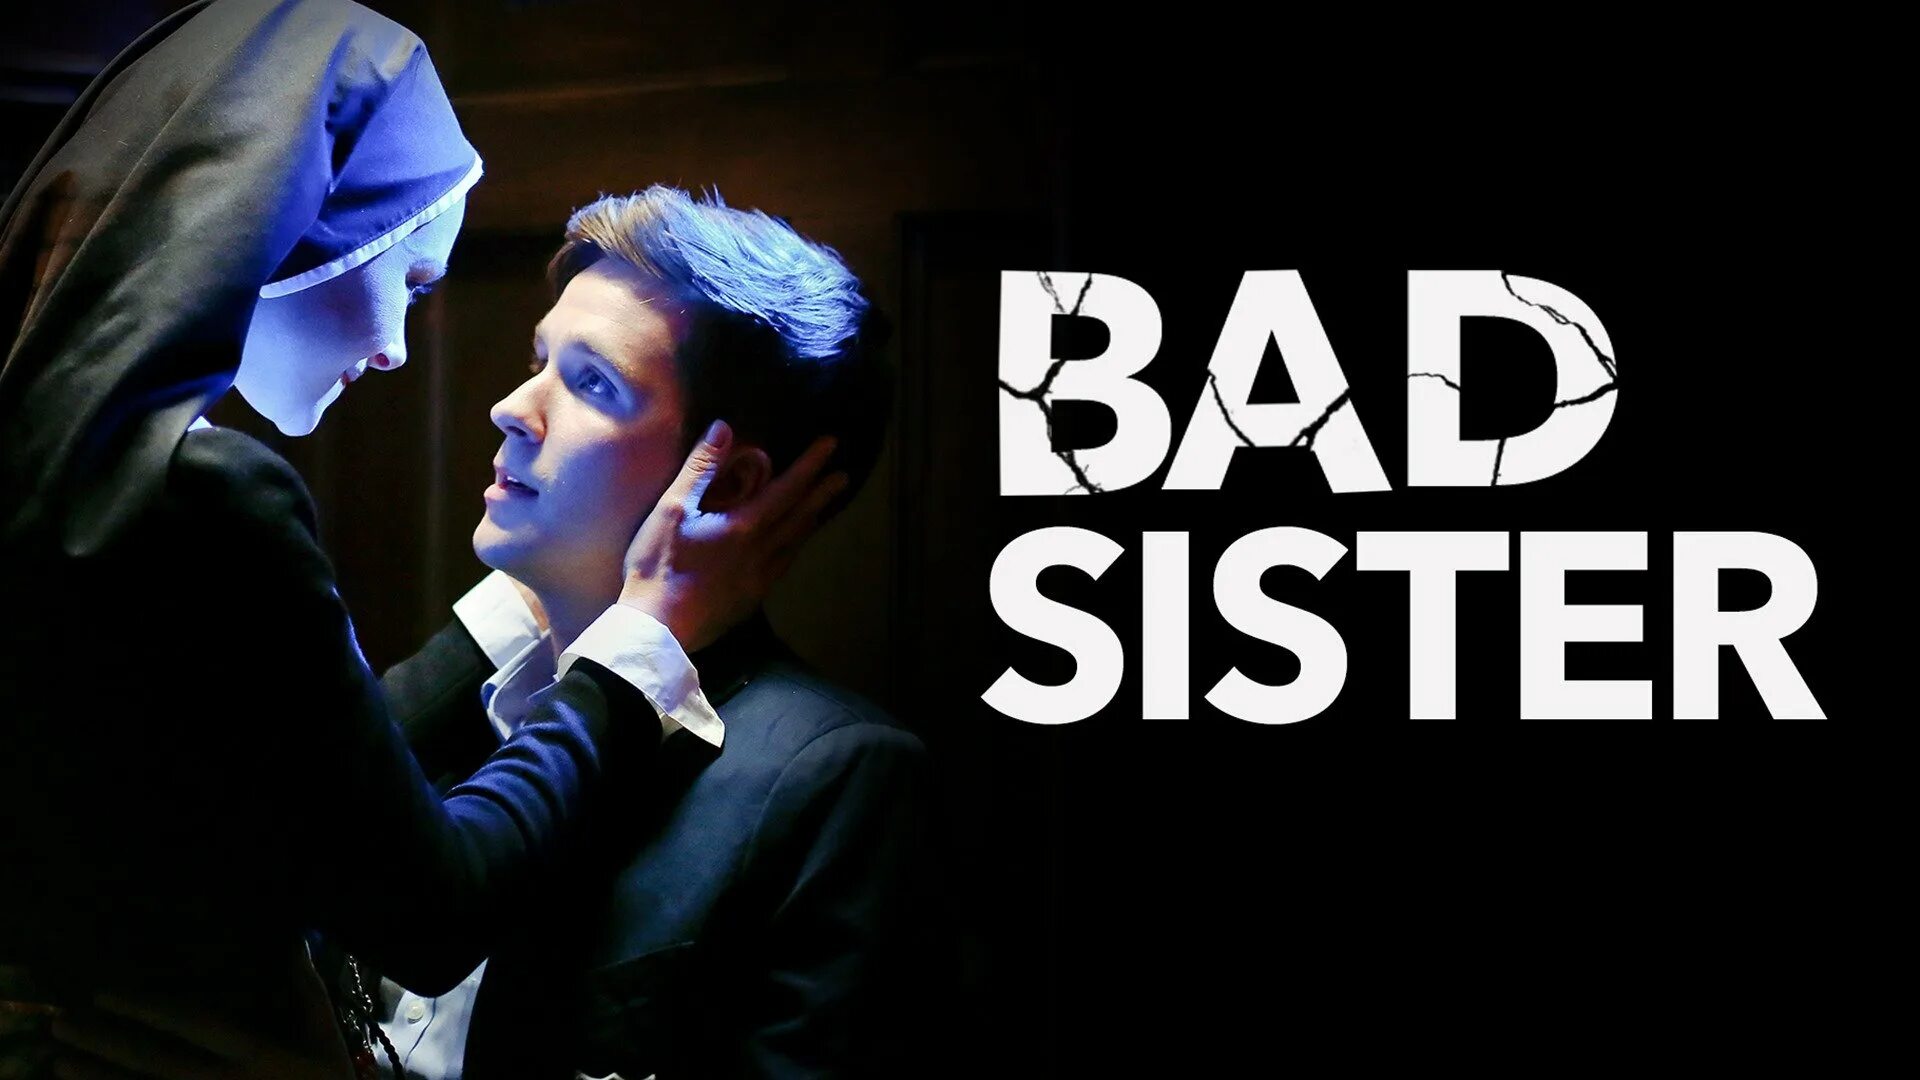 Bad sister 2015. Скверная монахиня (2015) Bad sister. Плохая сестра 2016. Bad sister 2